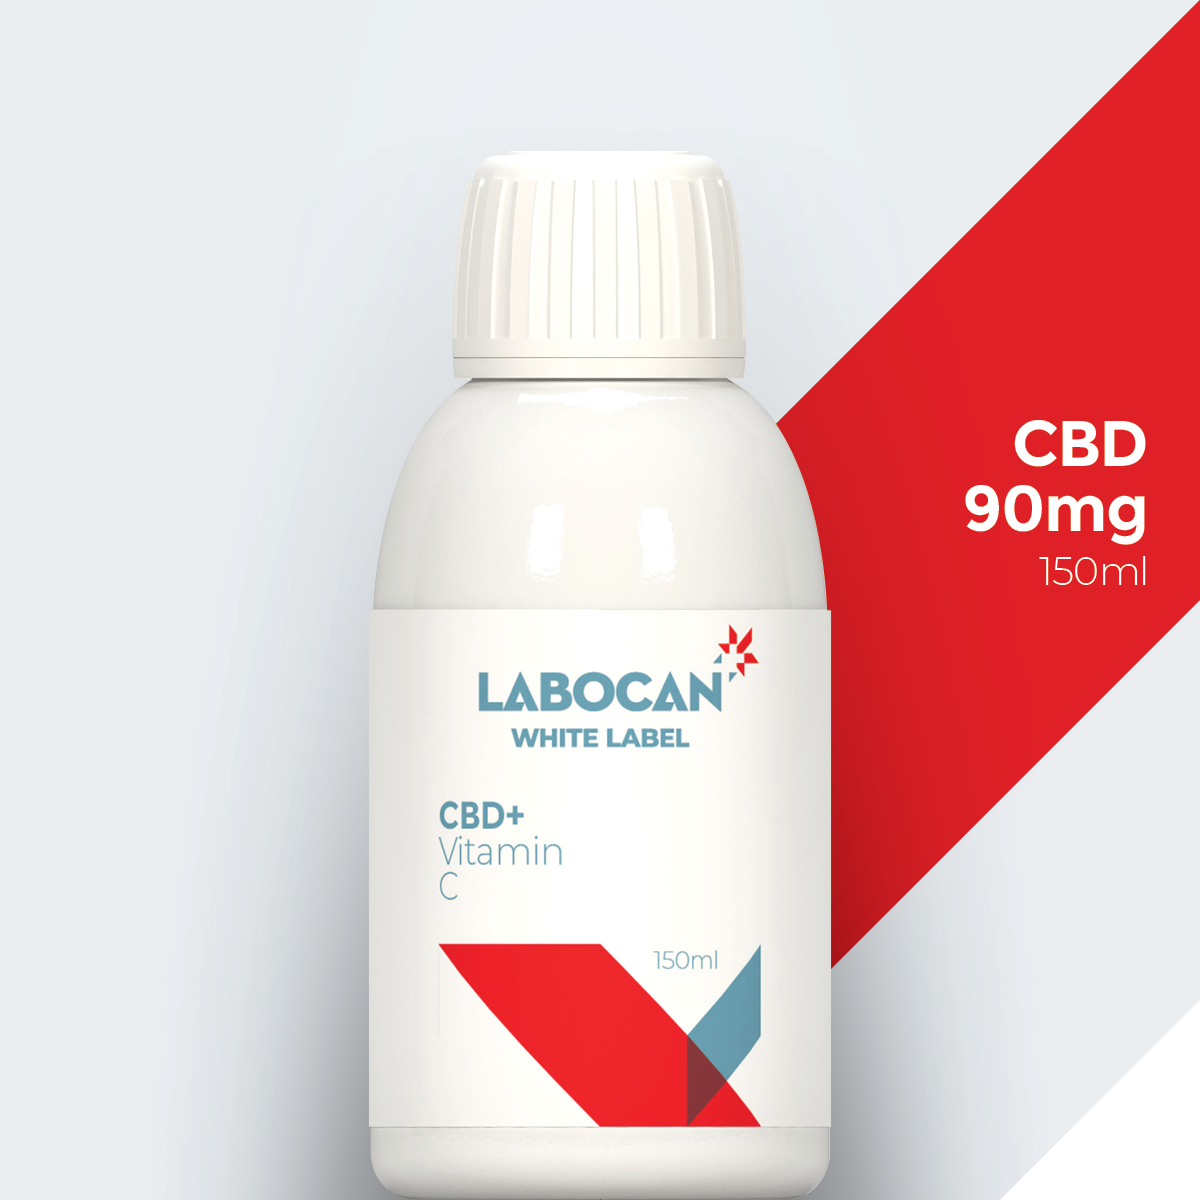 Labocan CBD etichetta bianca con vitamina C